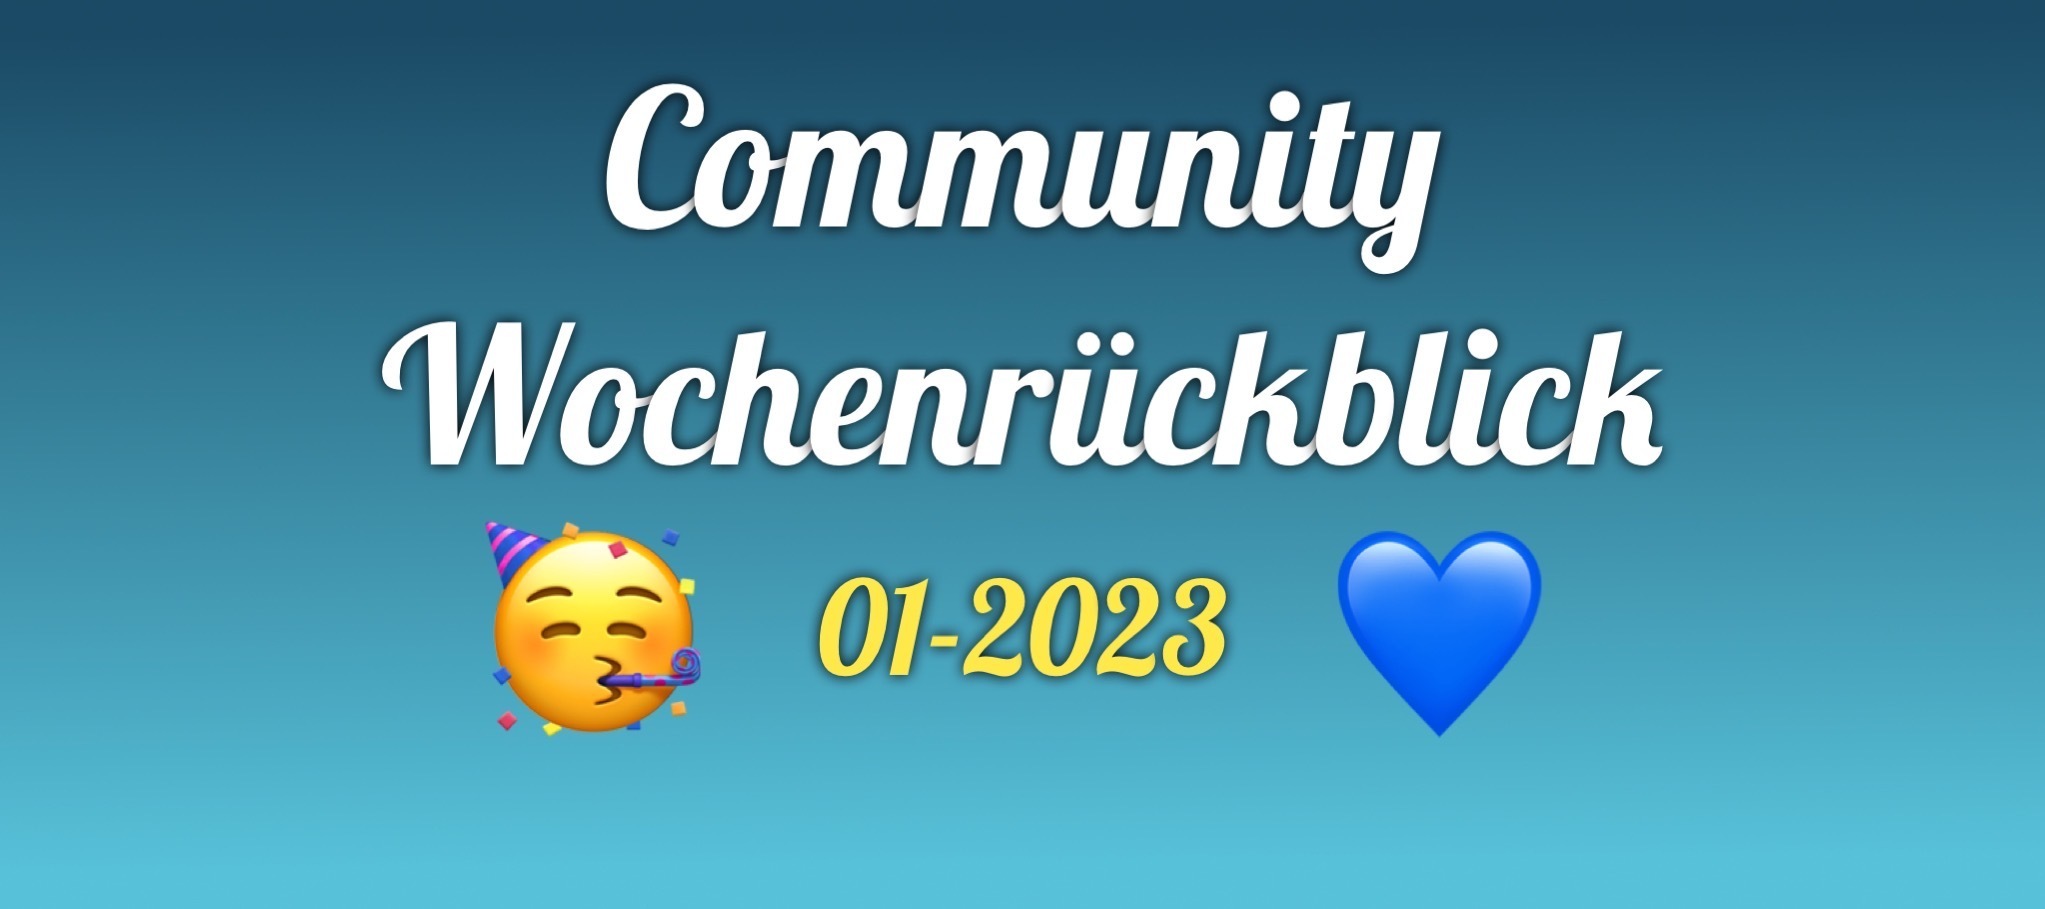 Community Wochenrückblick 01-2023